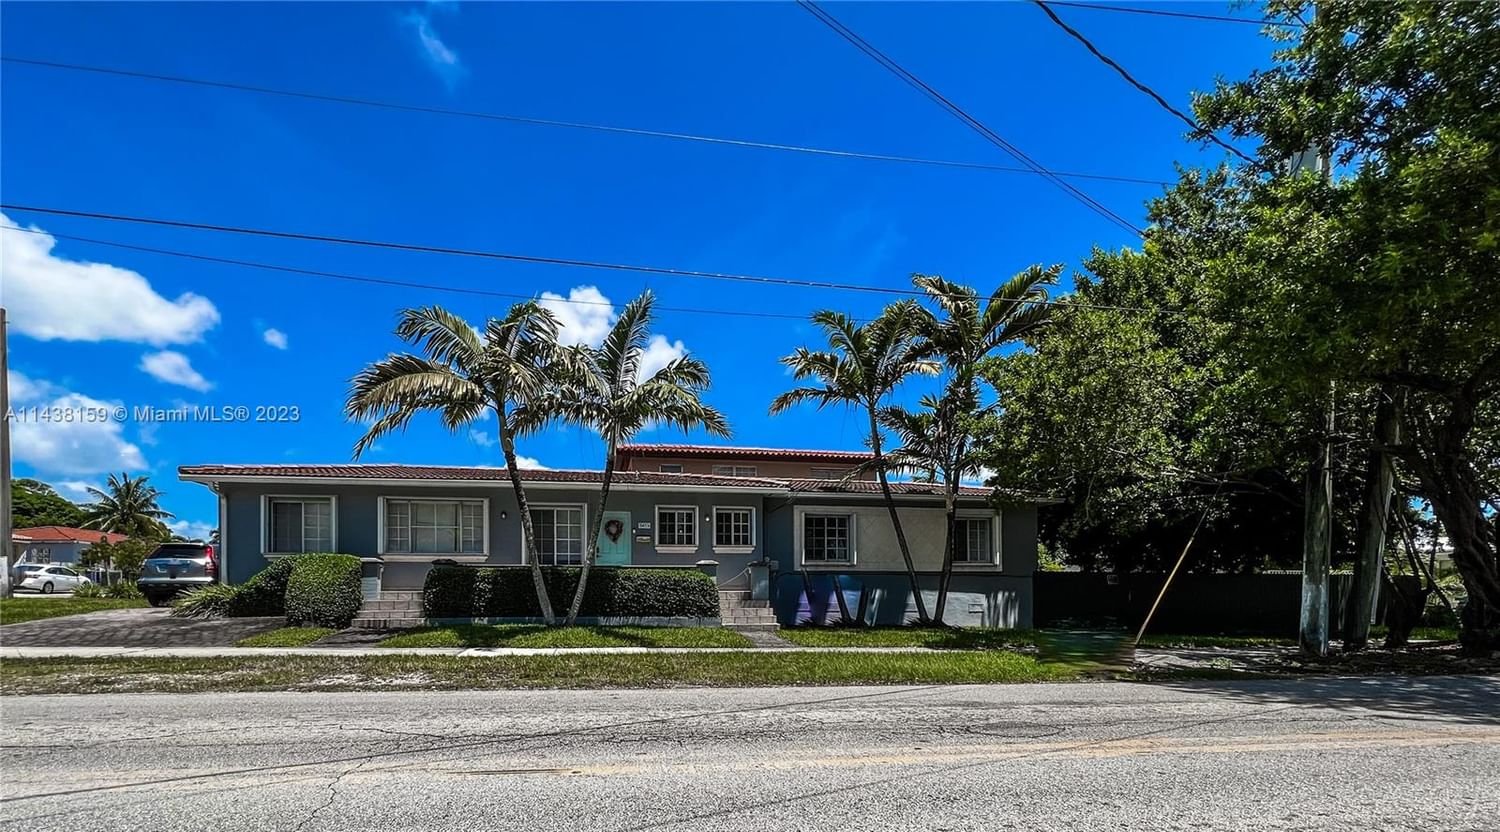 Real estate property located at 3455 28th St, Miami-Dade County, Miami, FL